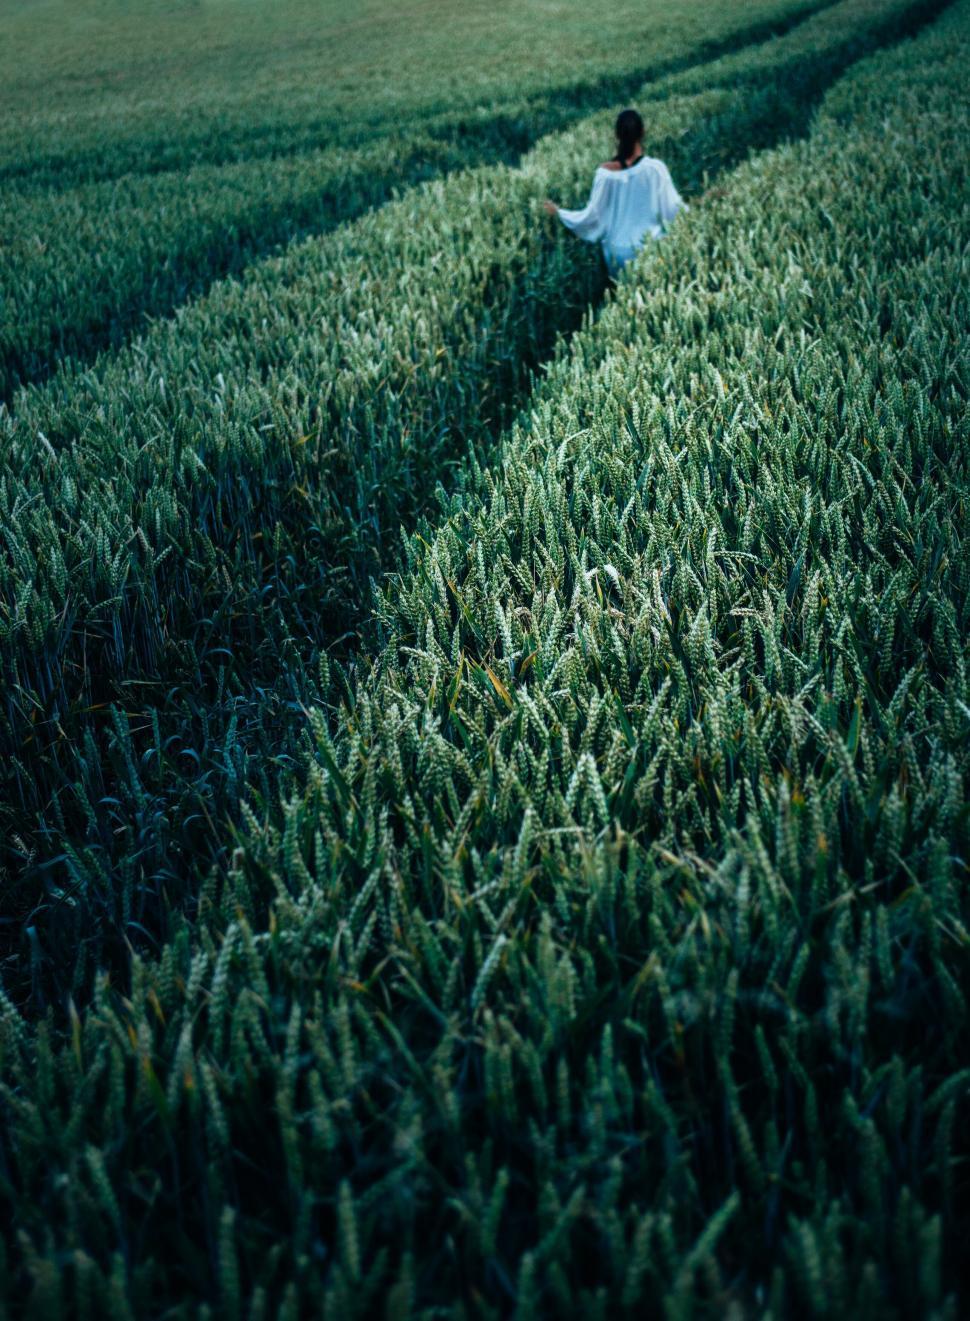 Free Image of Woman wandering through green wheat field 